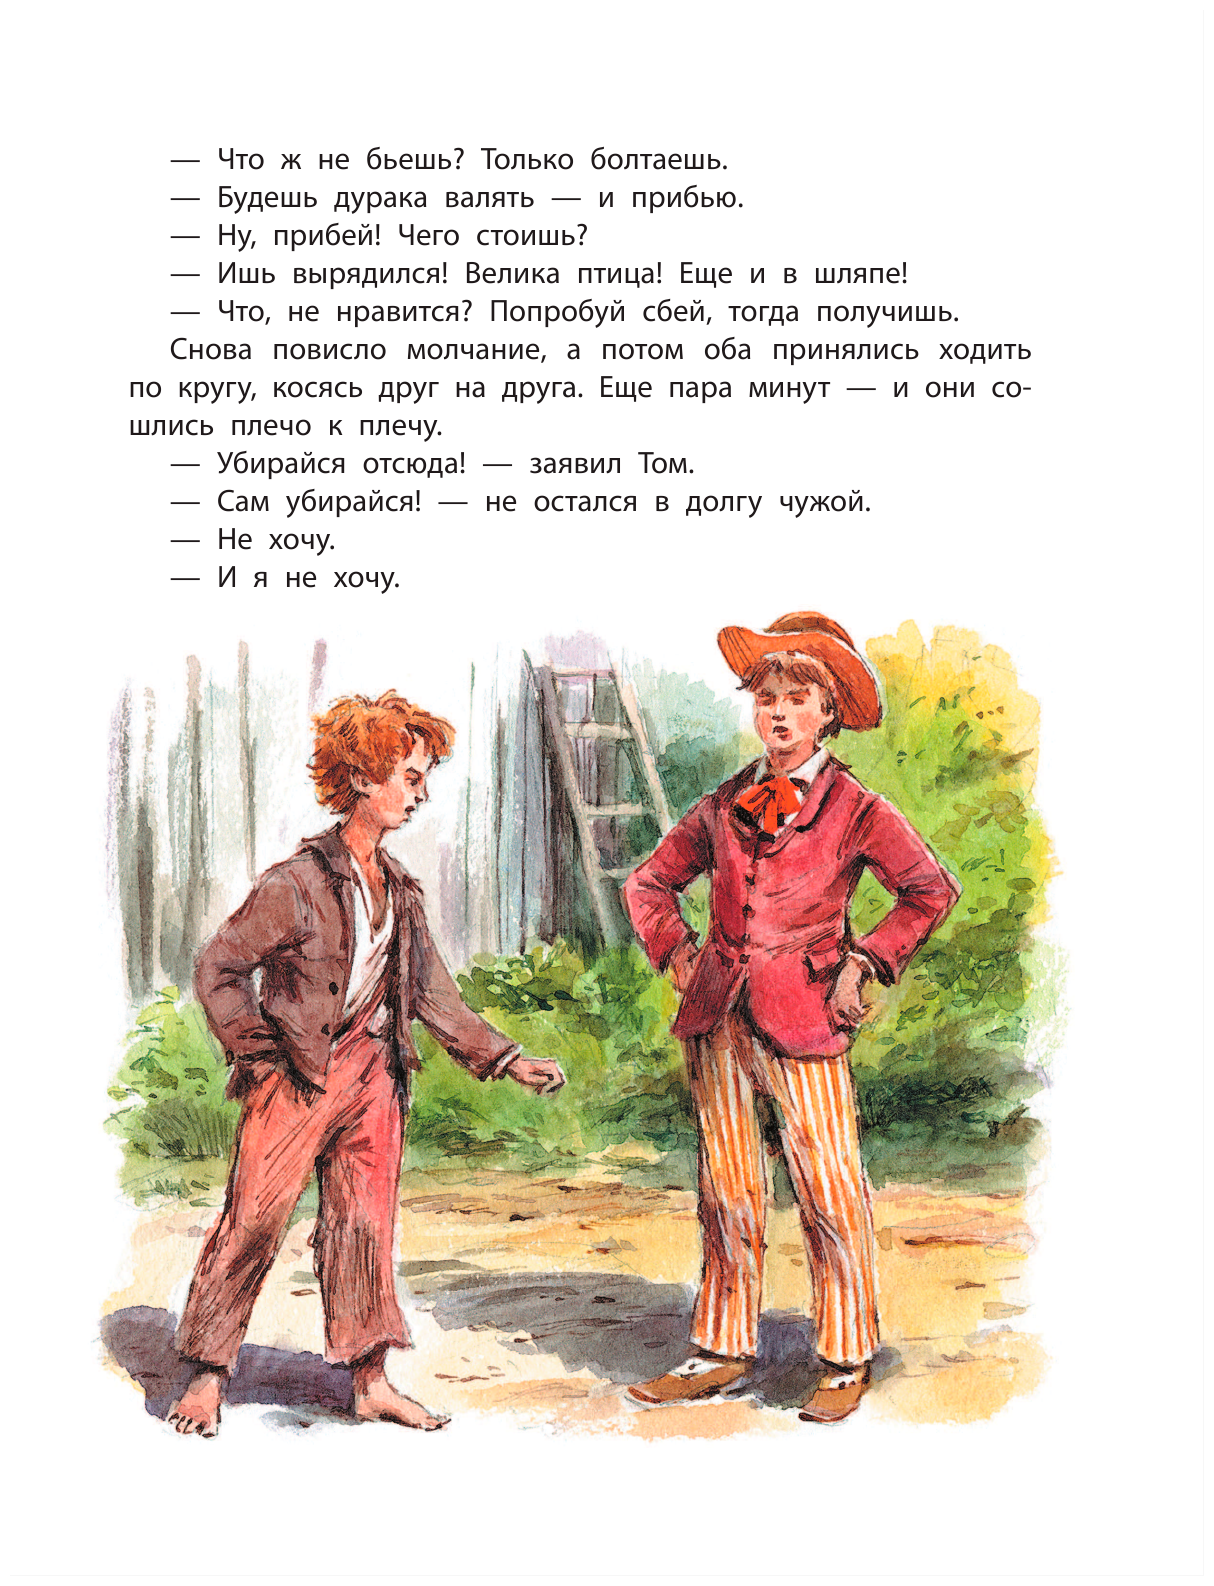 Твен м. "приключения Тома Сойера". Иллюстрация к рассказу марка Твена приключения Тома Сойера.